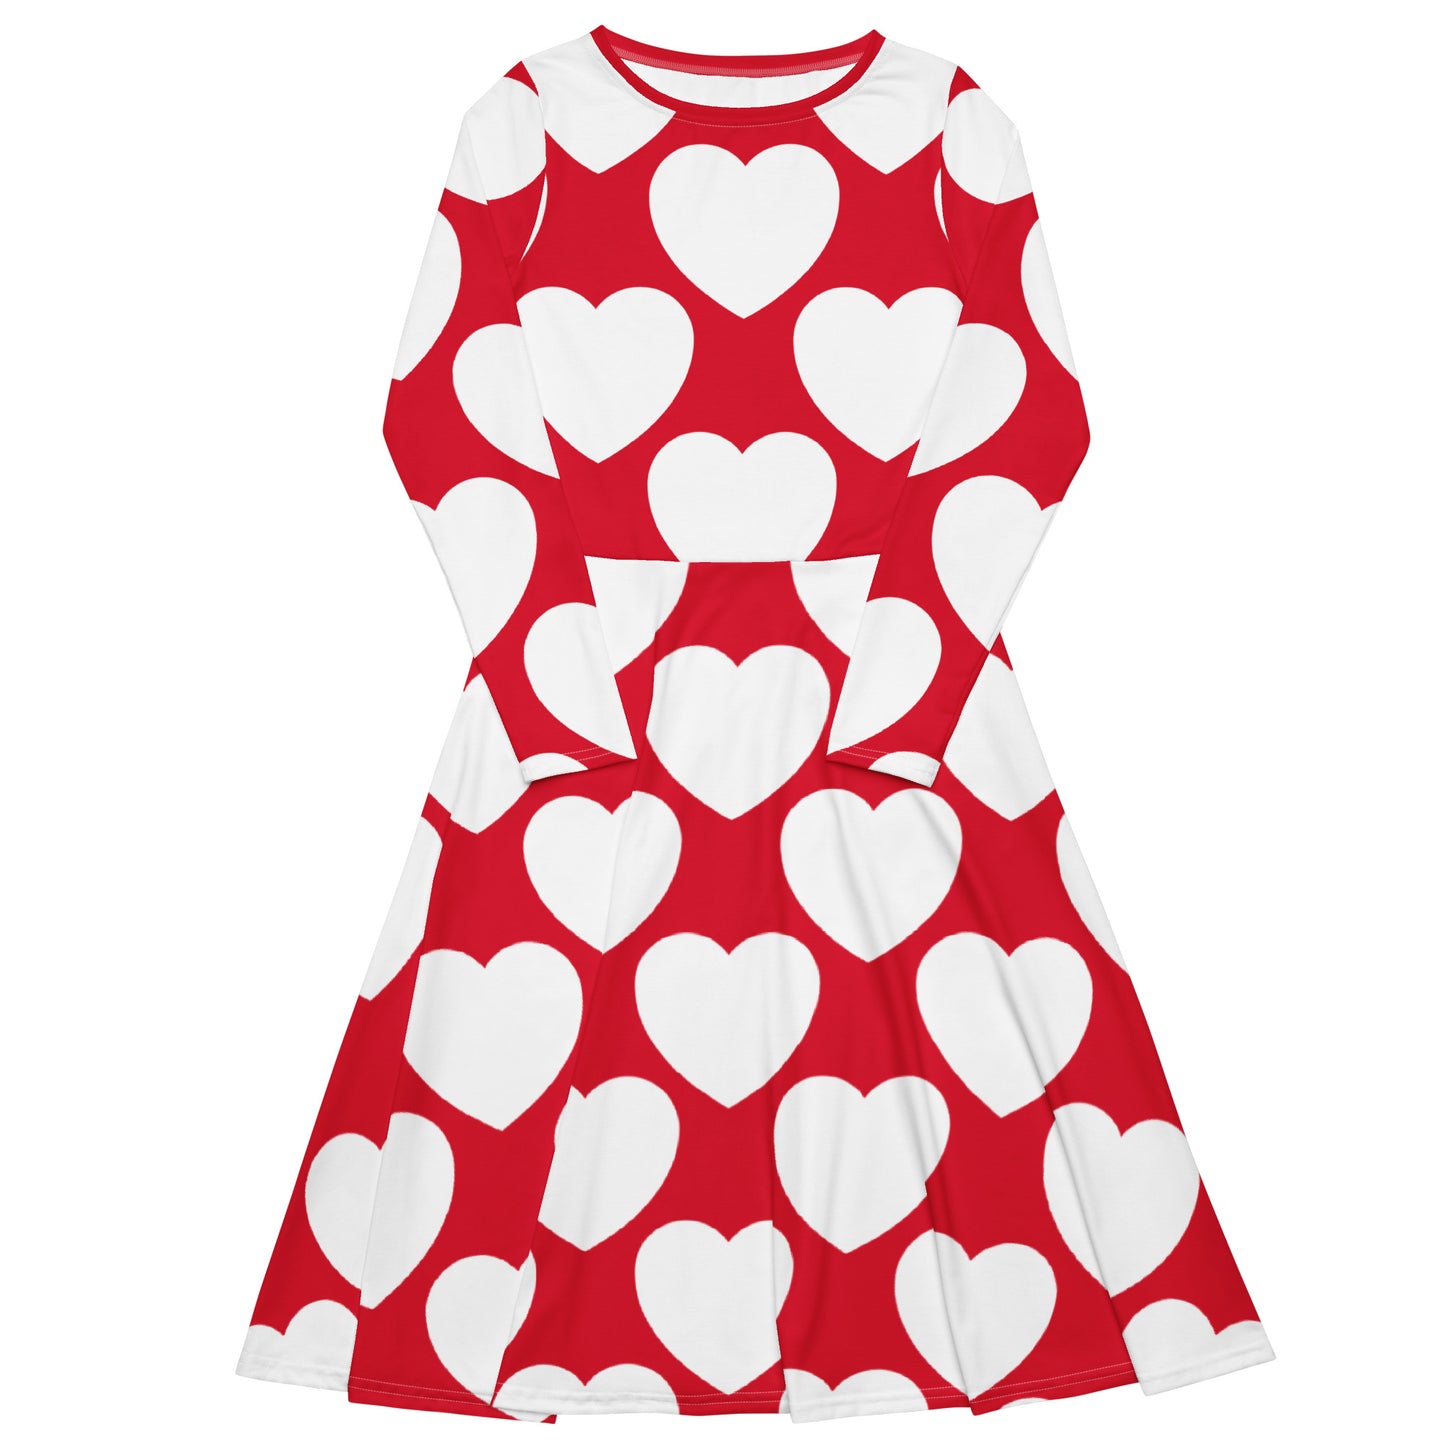 ELLIE LOVE redwhite - Midi dress with long sleeves and handy pockets - SHALMIAK